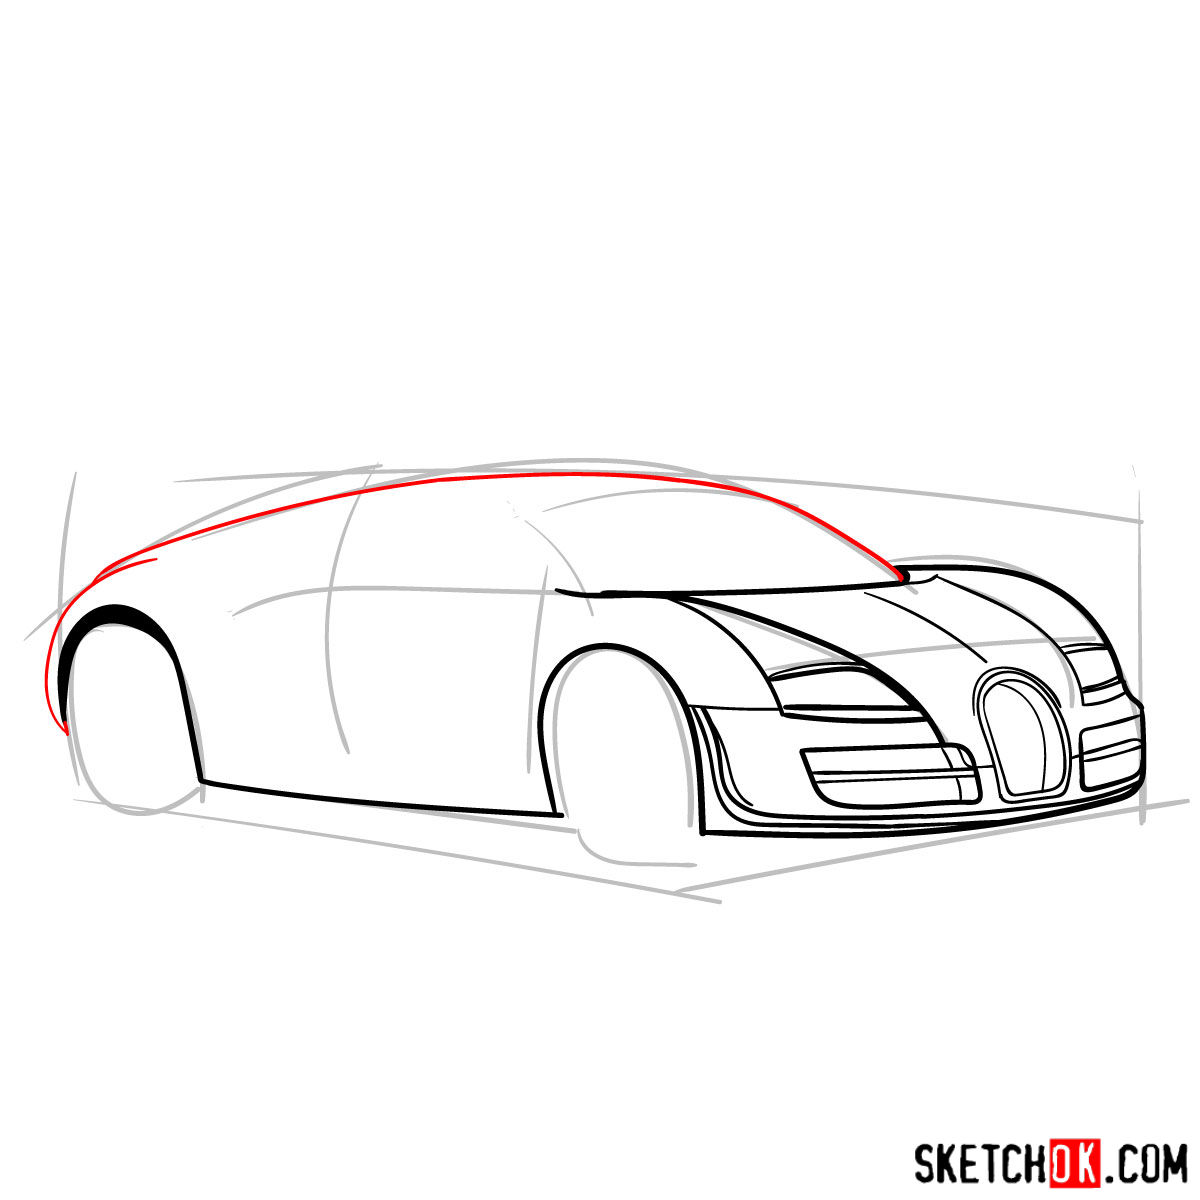 How to draw Bugatti Veyron 16.4 Super Sport - step 06